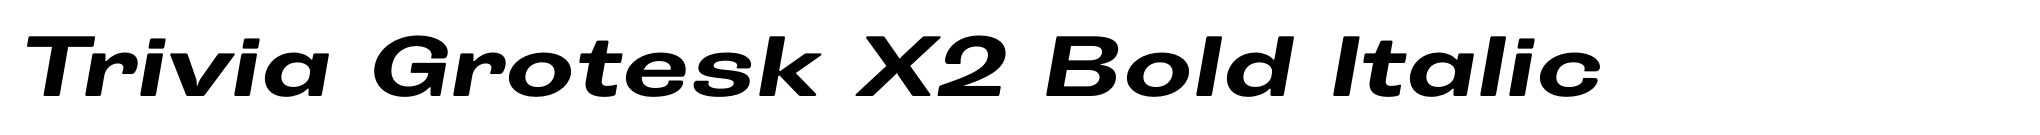 Trivia Grotesk X2 Bold Italic image